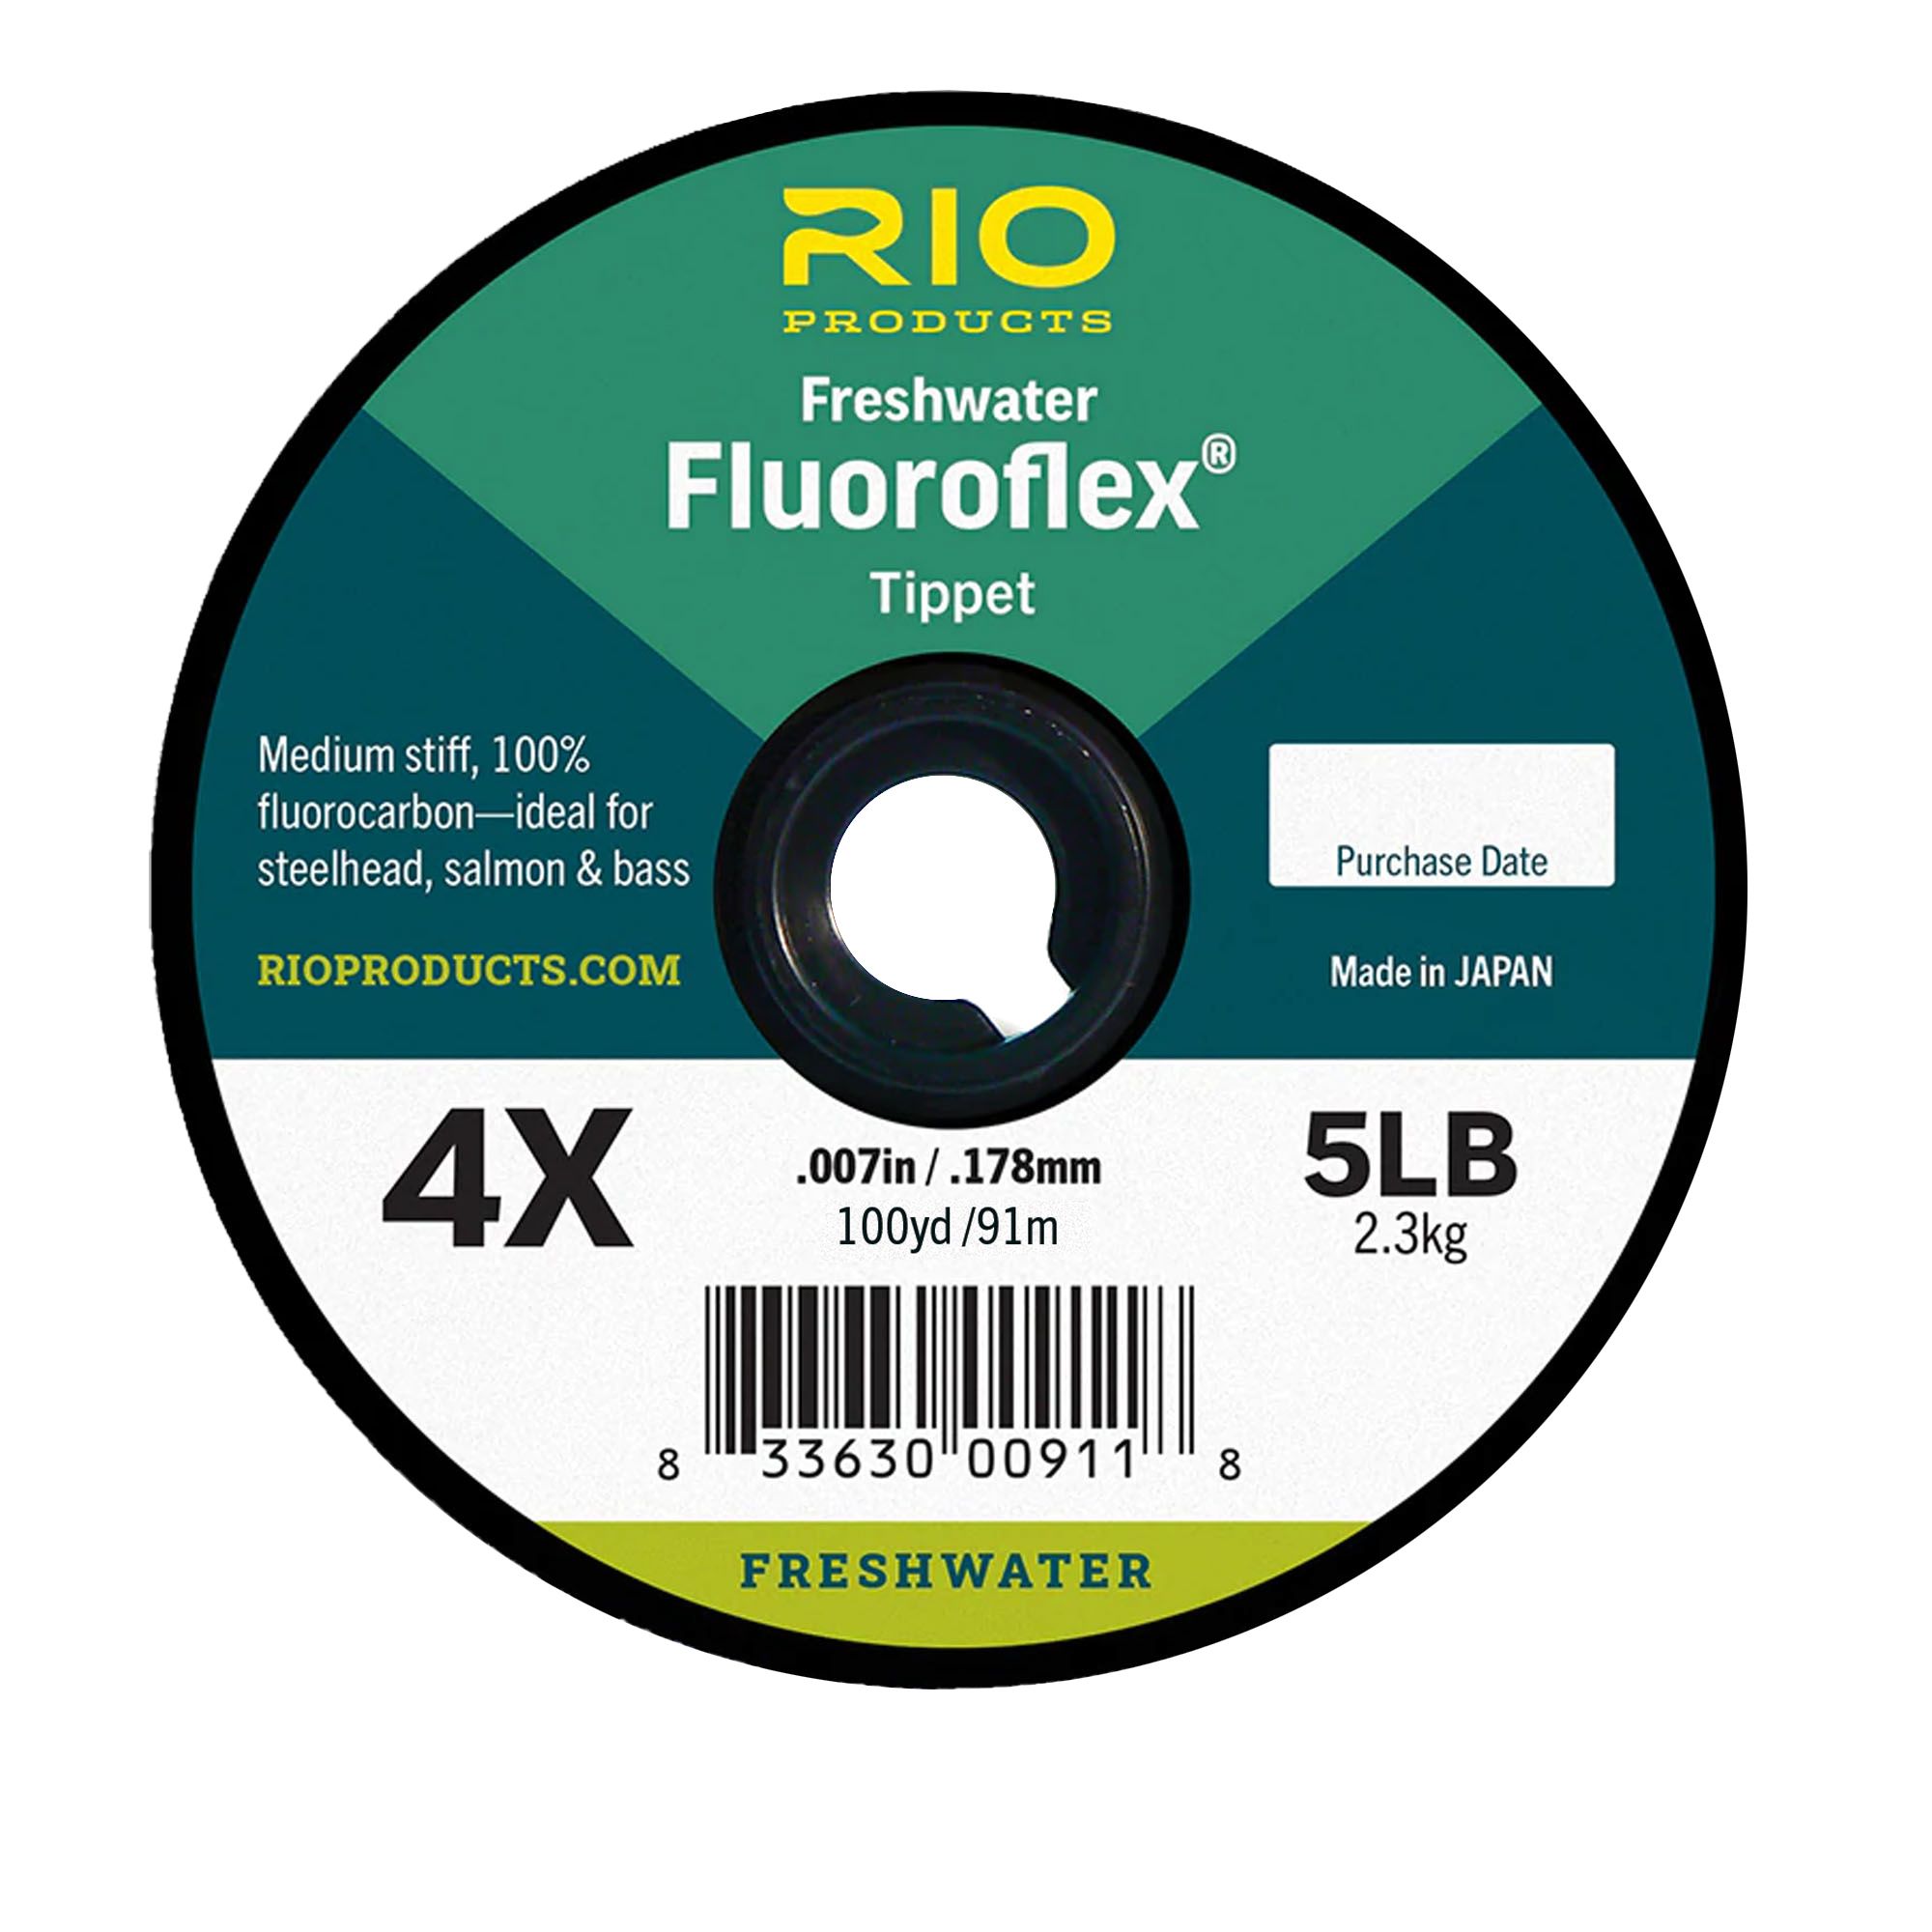 RIO Freshwater Fluoroflex Tippet 100yds - Fin & Game